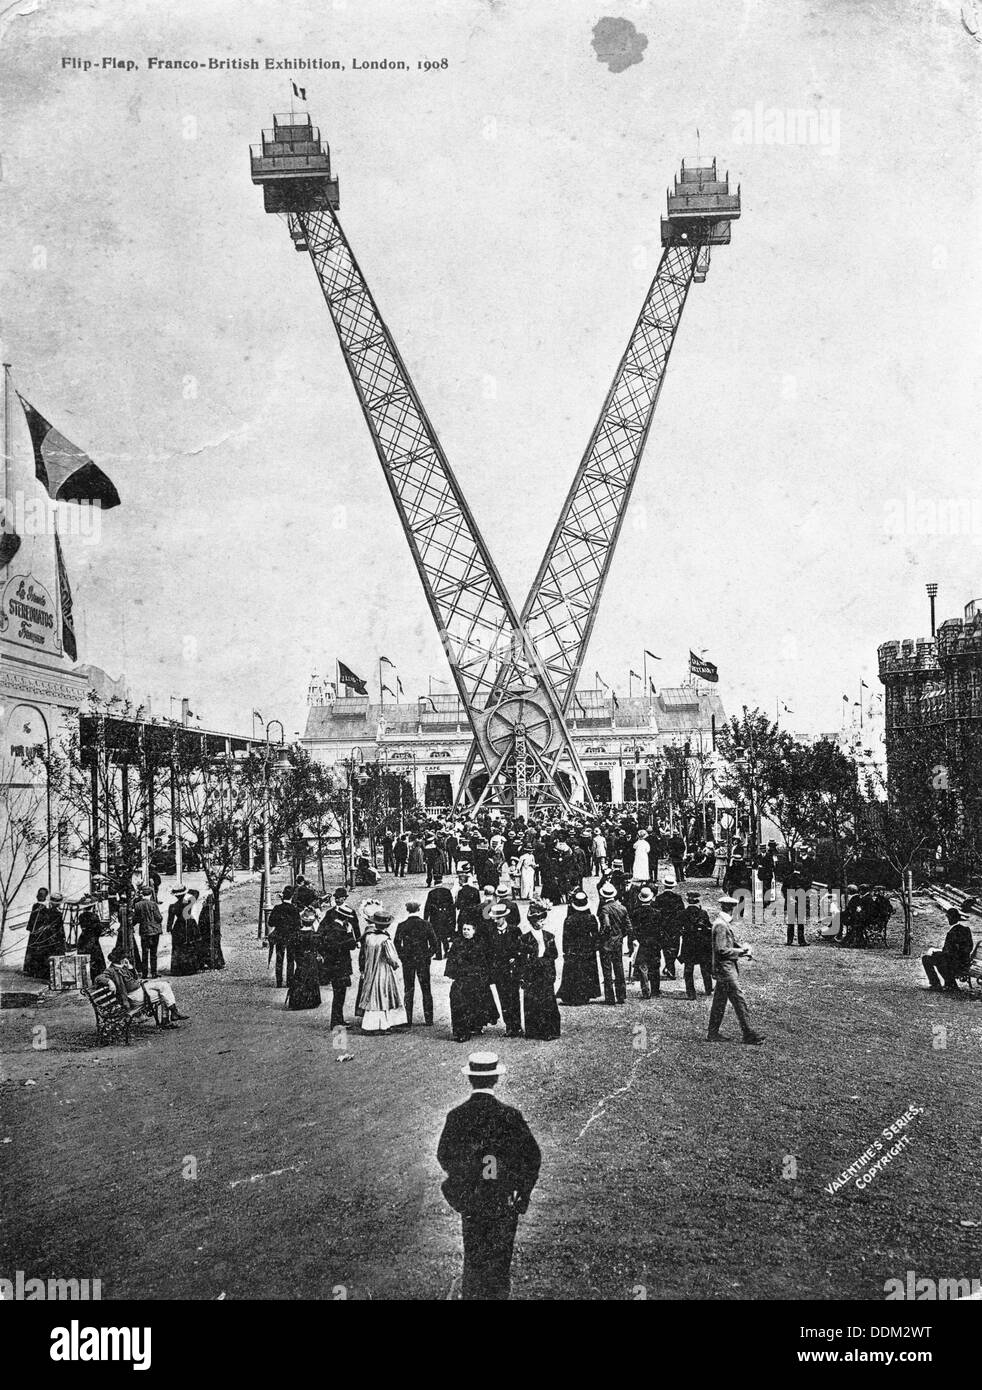 The Flip-Flap amusement ride, Franco-British Exhibition, White City, London, 1908. Artist: Unknown Stock Photo